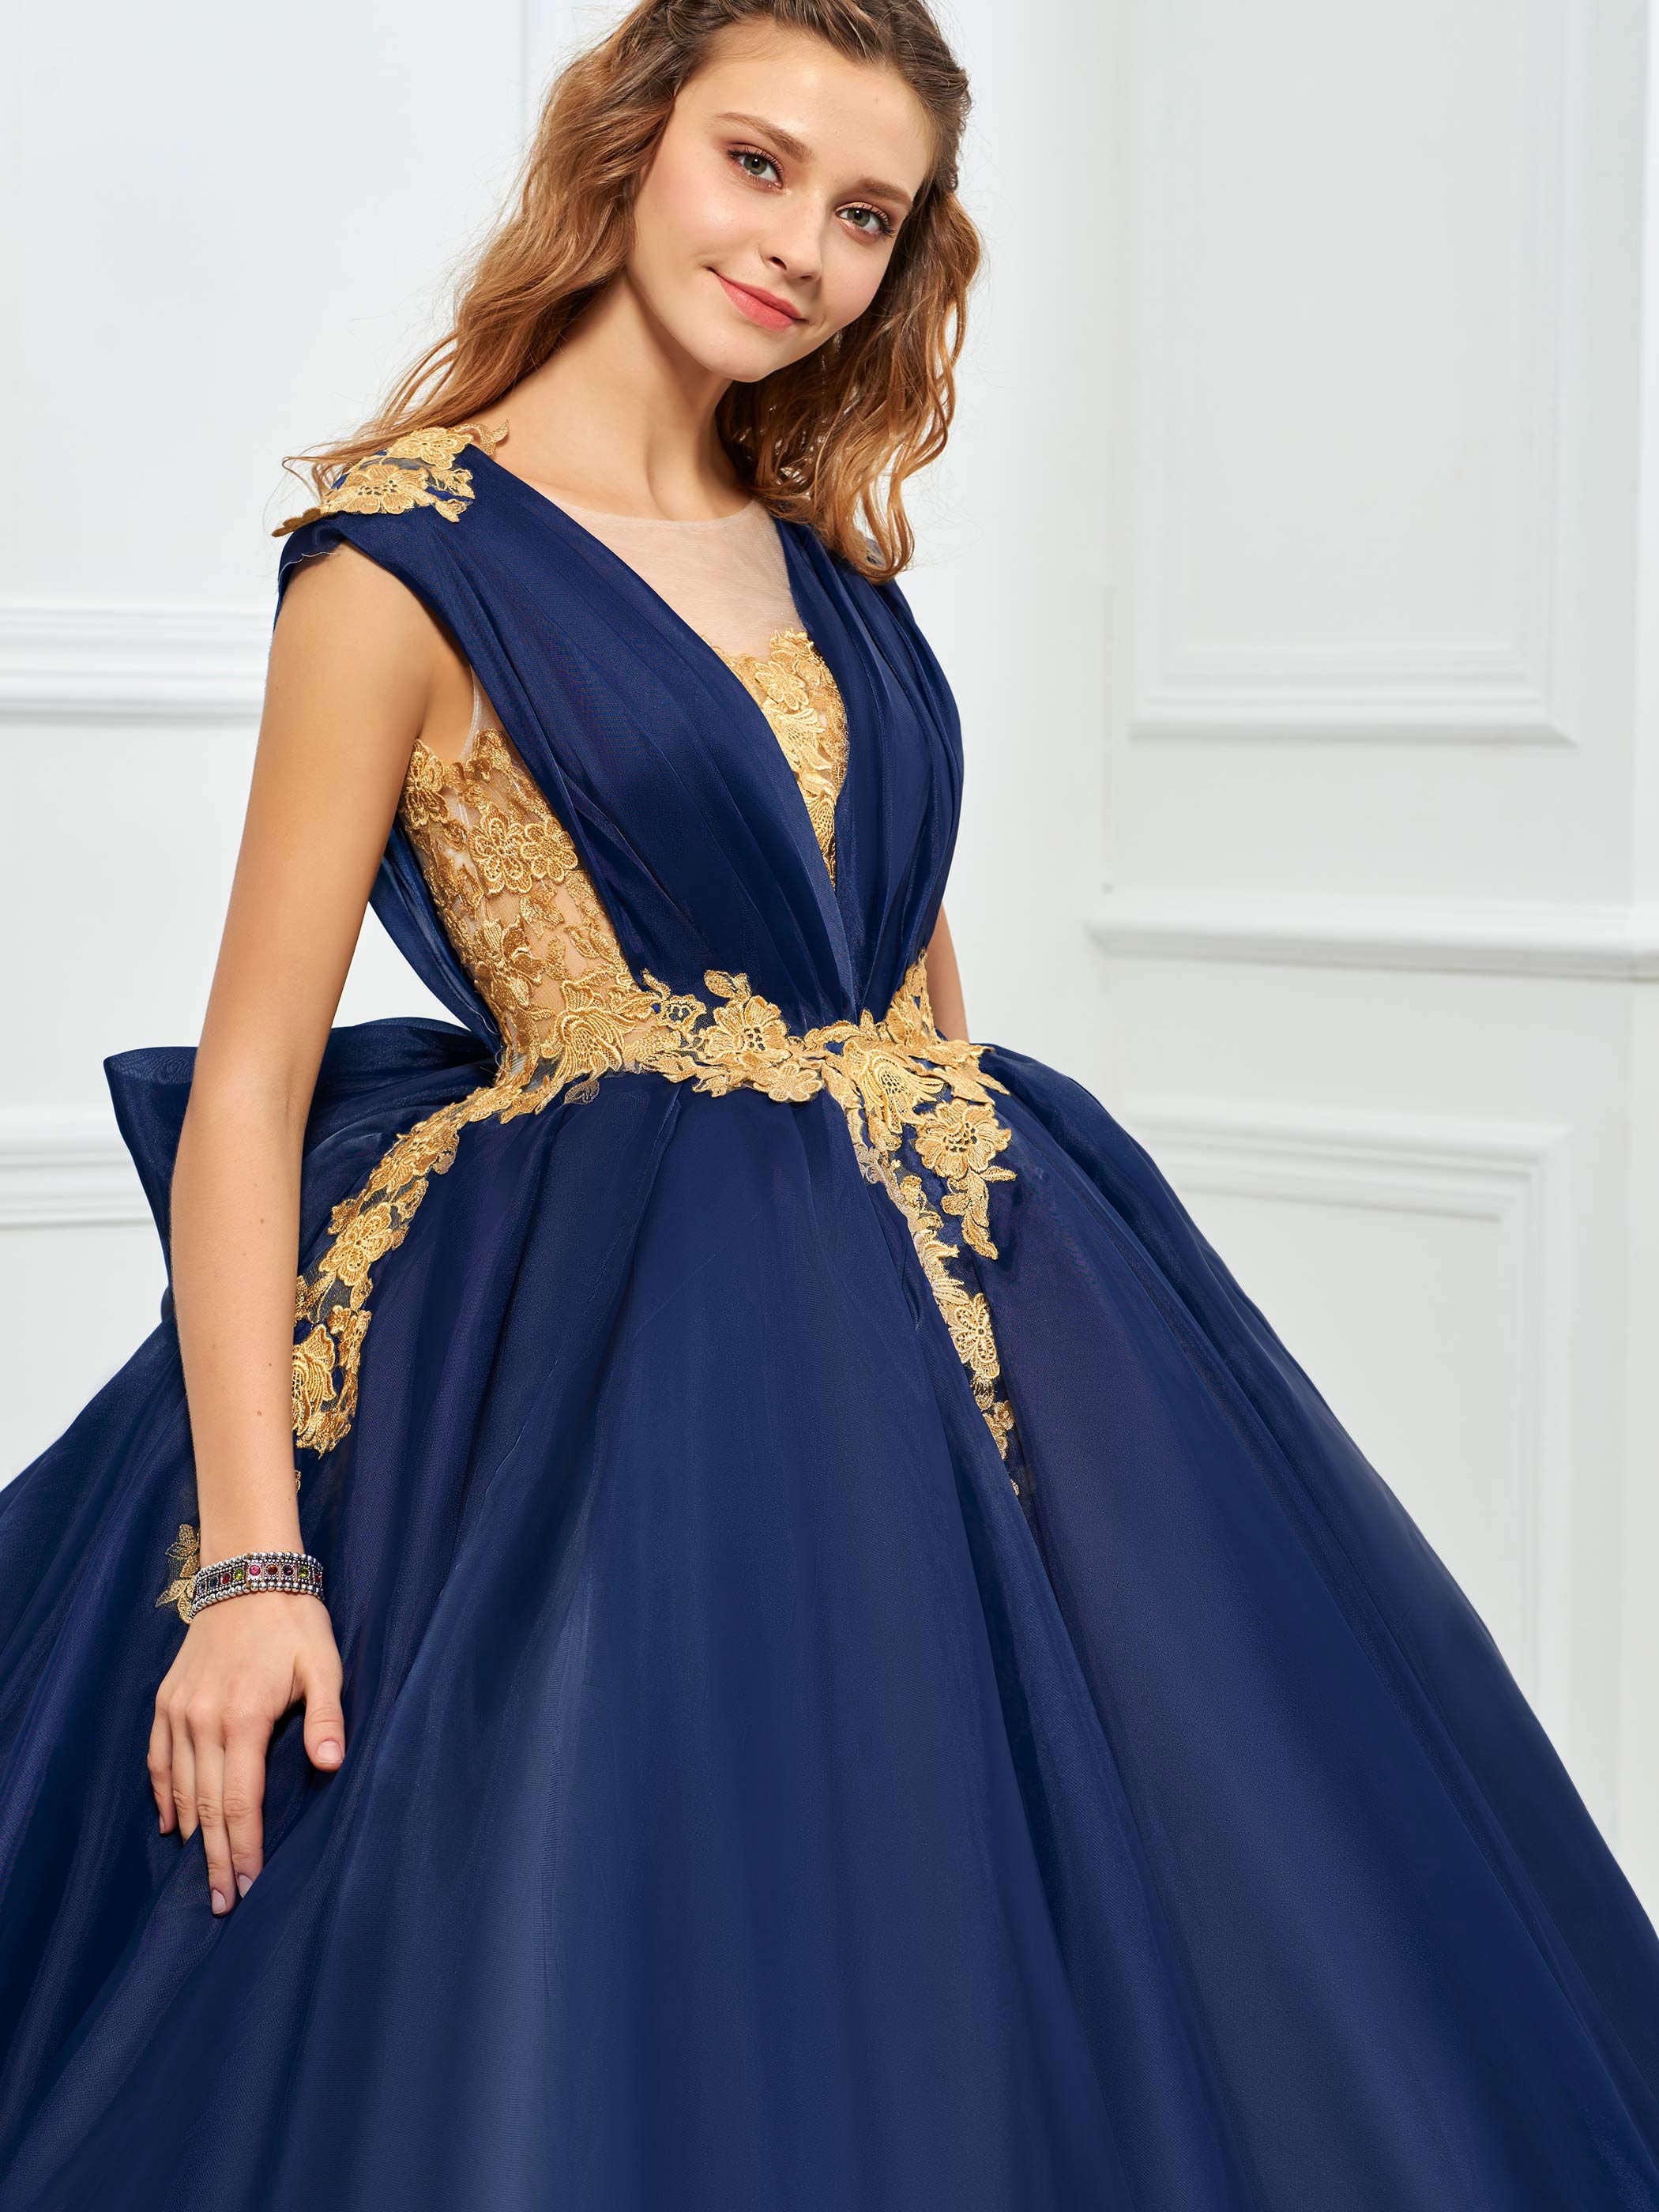 Ericdress Vintage V Neck Applique Lace Ball Gown Quinceanera Dress